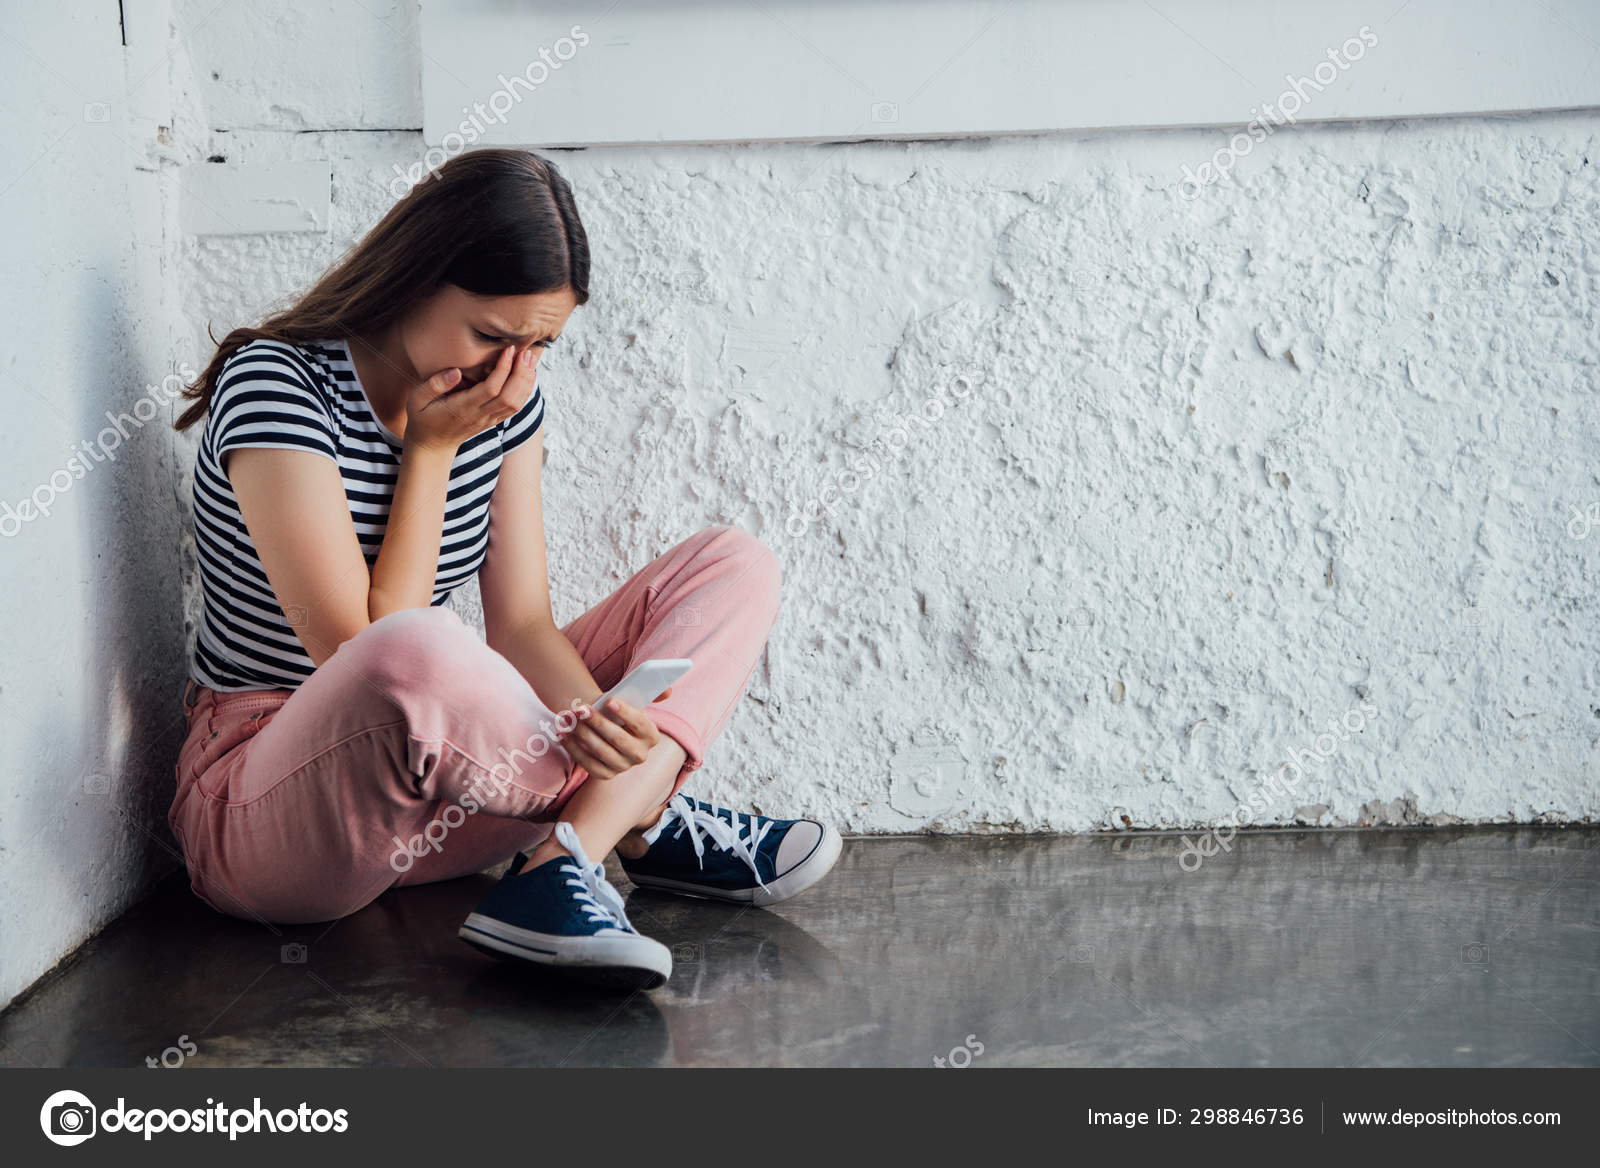 Sad Crying Girl Pink Pants Sitting Wall Holding Smartphone Stock ...